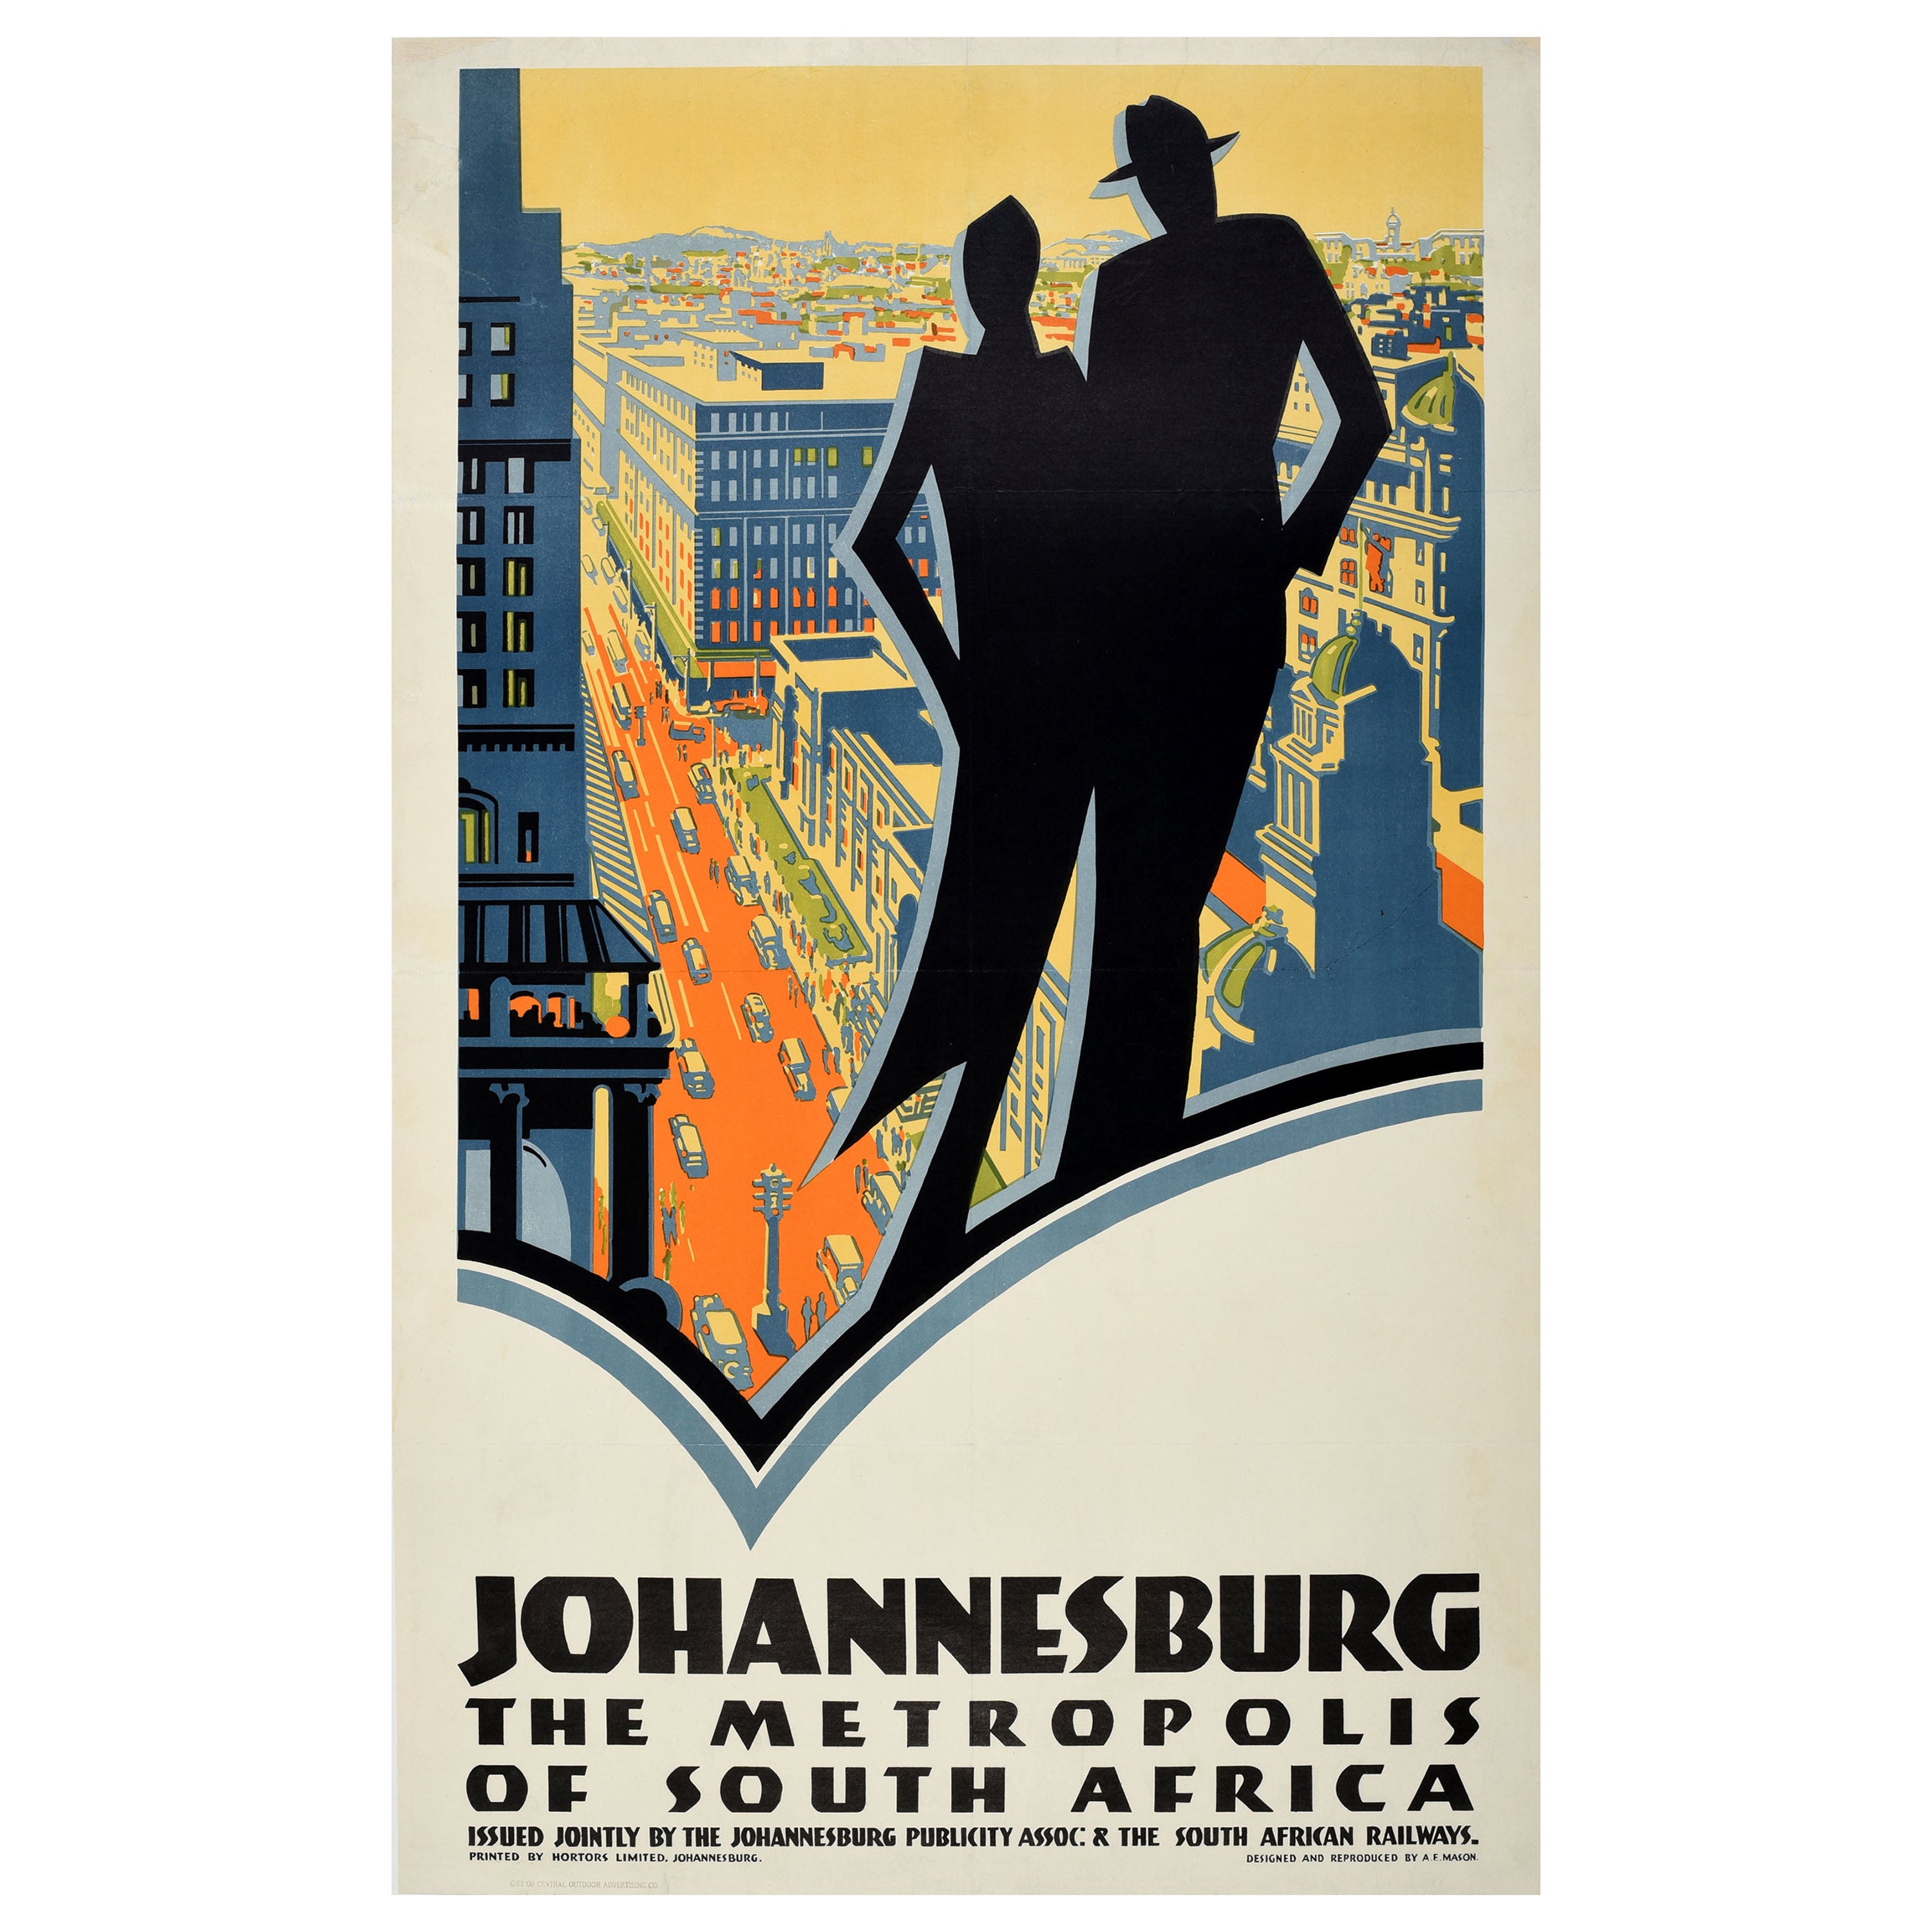 Original Vintage Rail Travel Poster Johannesburg The Metropolis Of South Africa